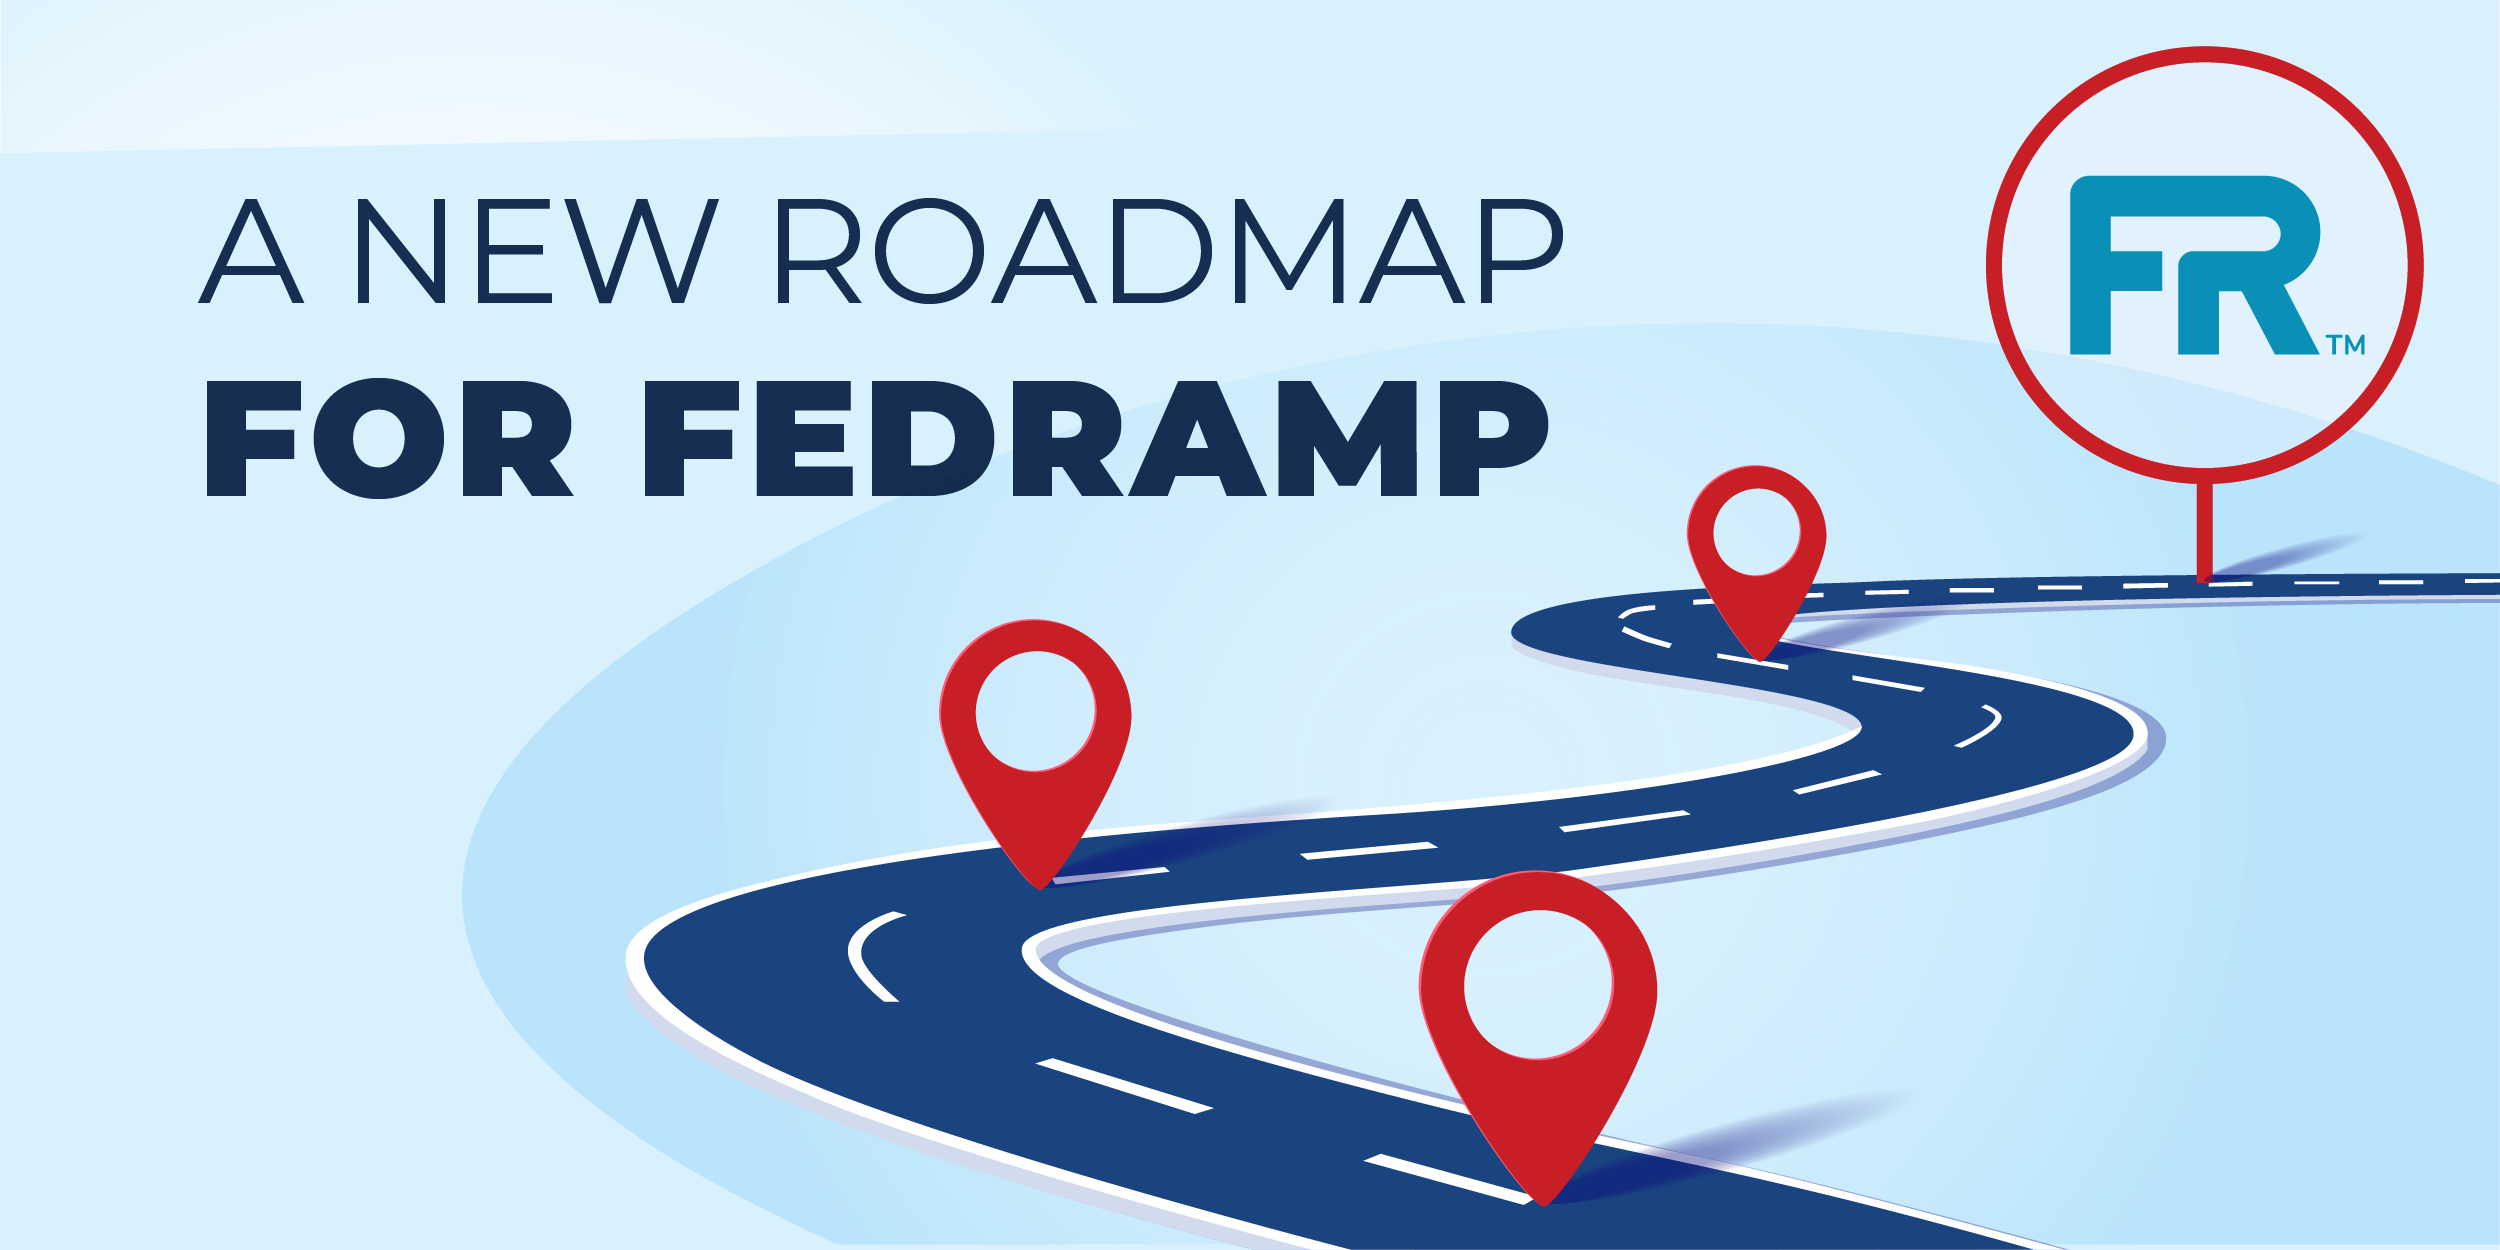 A New Roadmap for FedRAMP